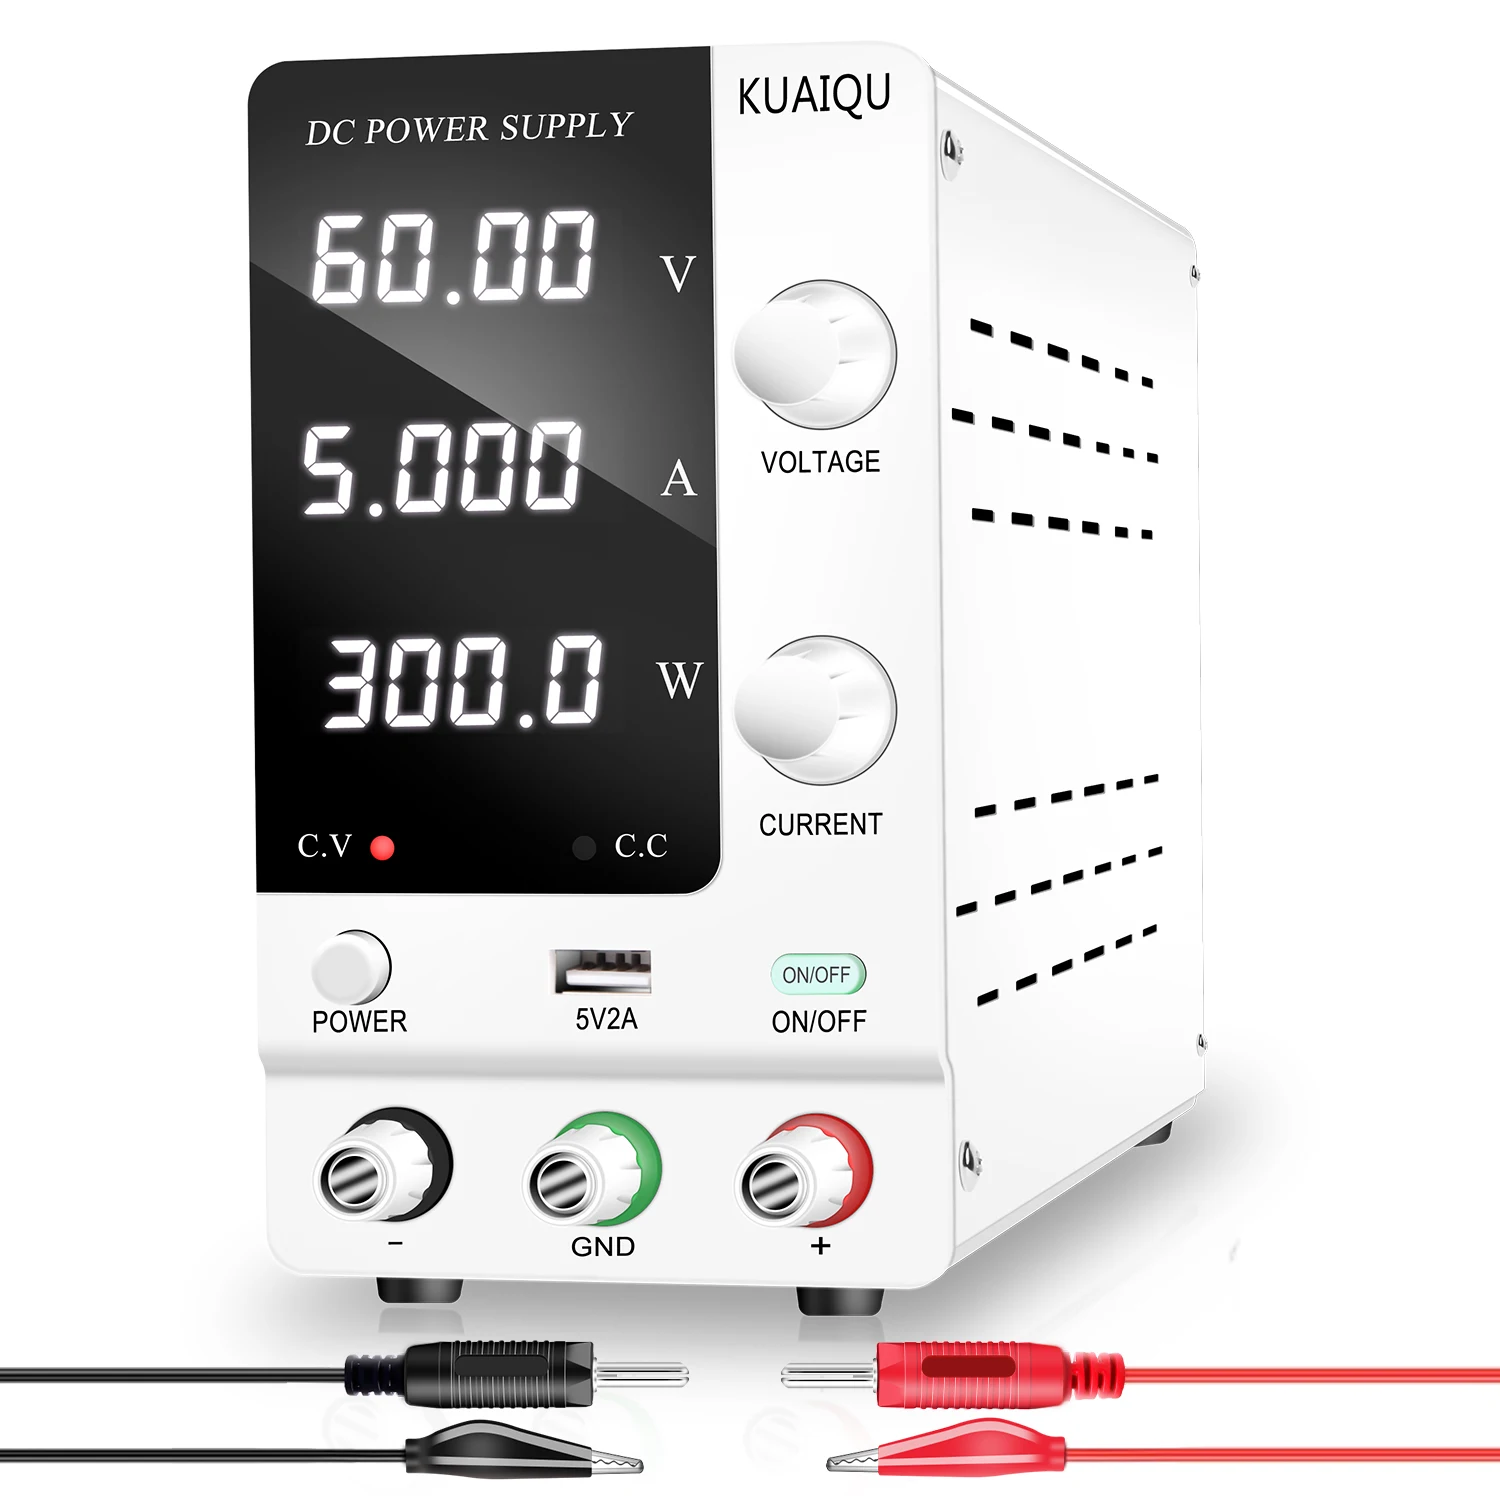 

KUAIQU SPPS-C605 White 60V 5A Digital Lab DC Power Supply Desktop Mini Voltage Regulator Adjustable Switching Power Supply